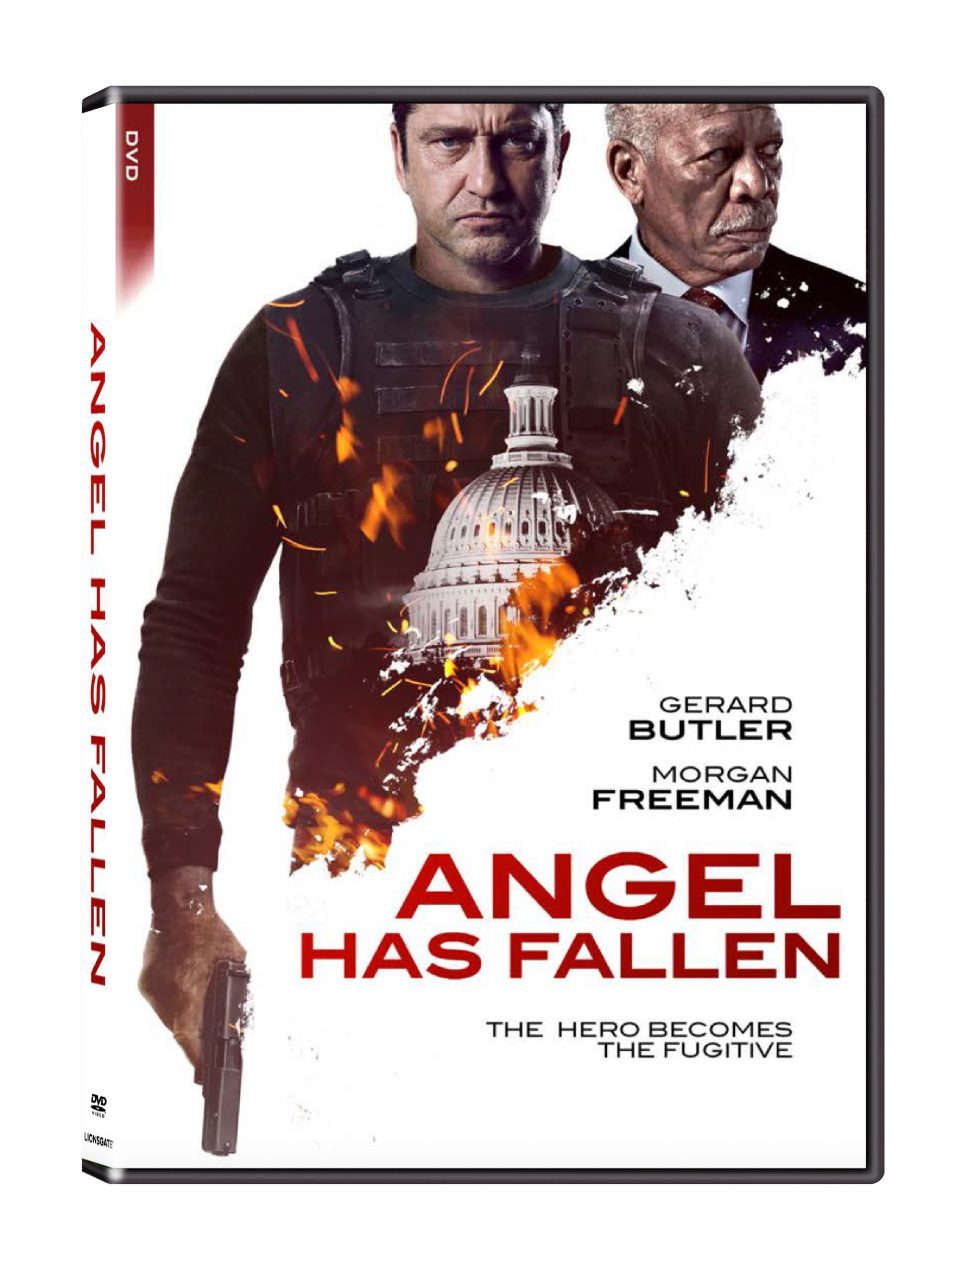 Angel Has Fallen DVD cover (Lionsgate Home Entertainment)